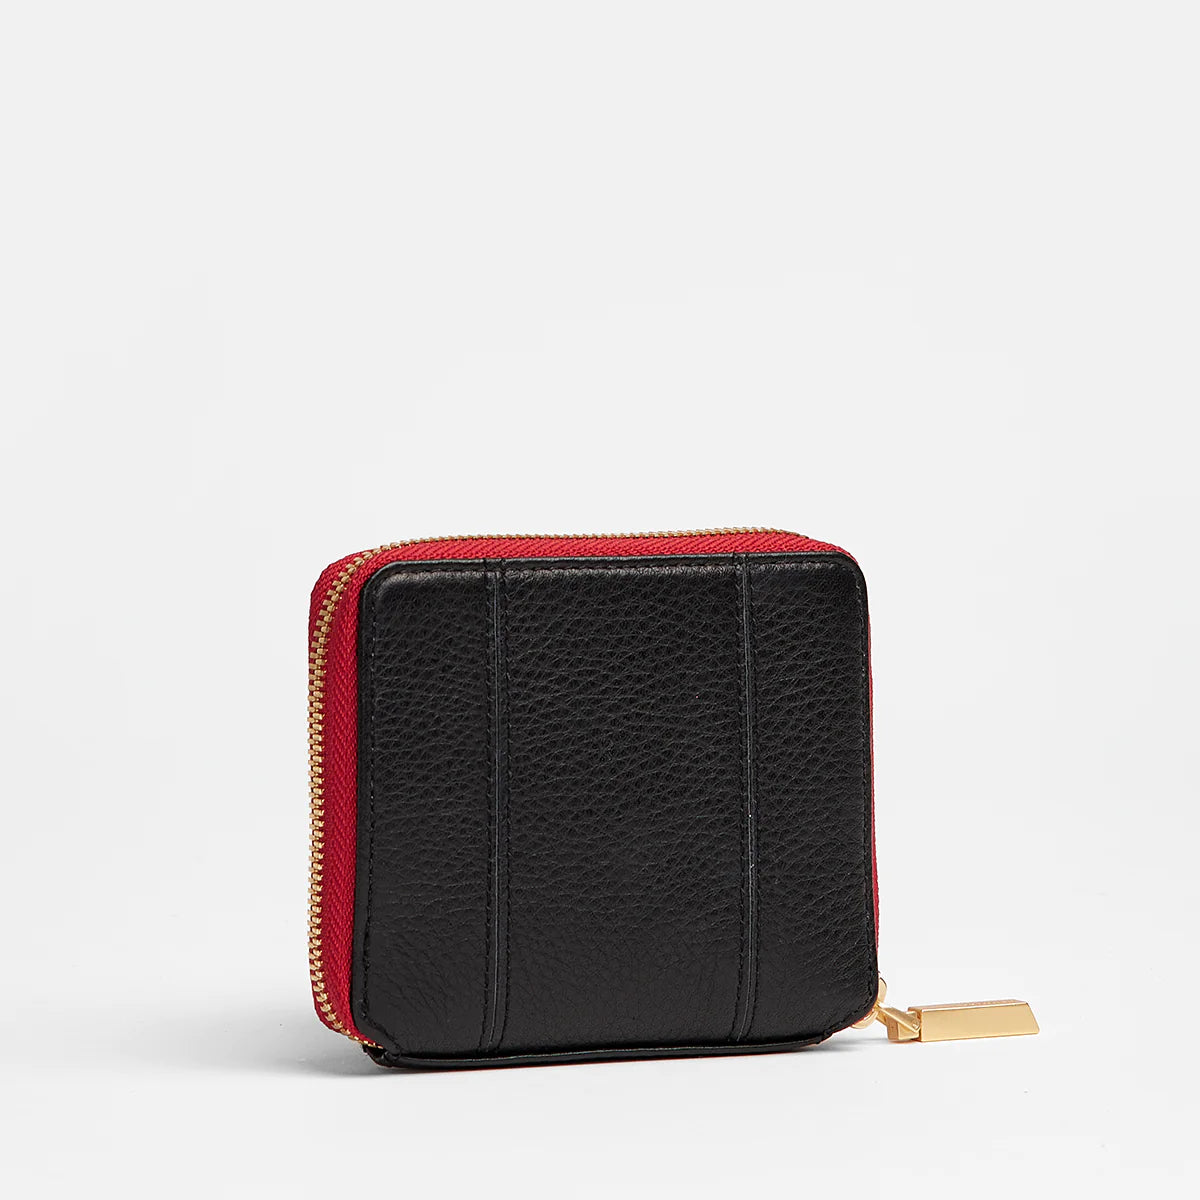 Hammitt 5 North Black Wallet with Red Zip 